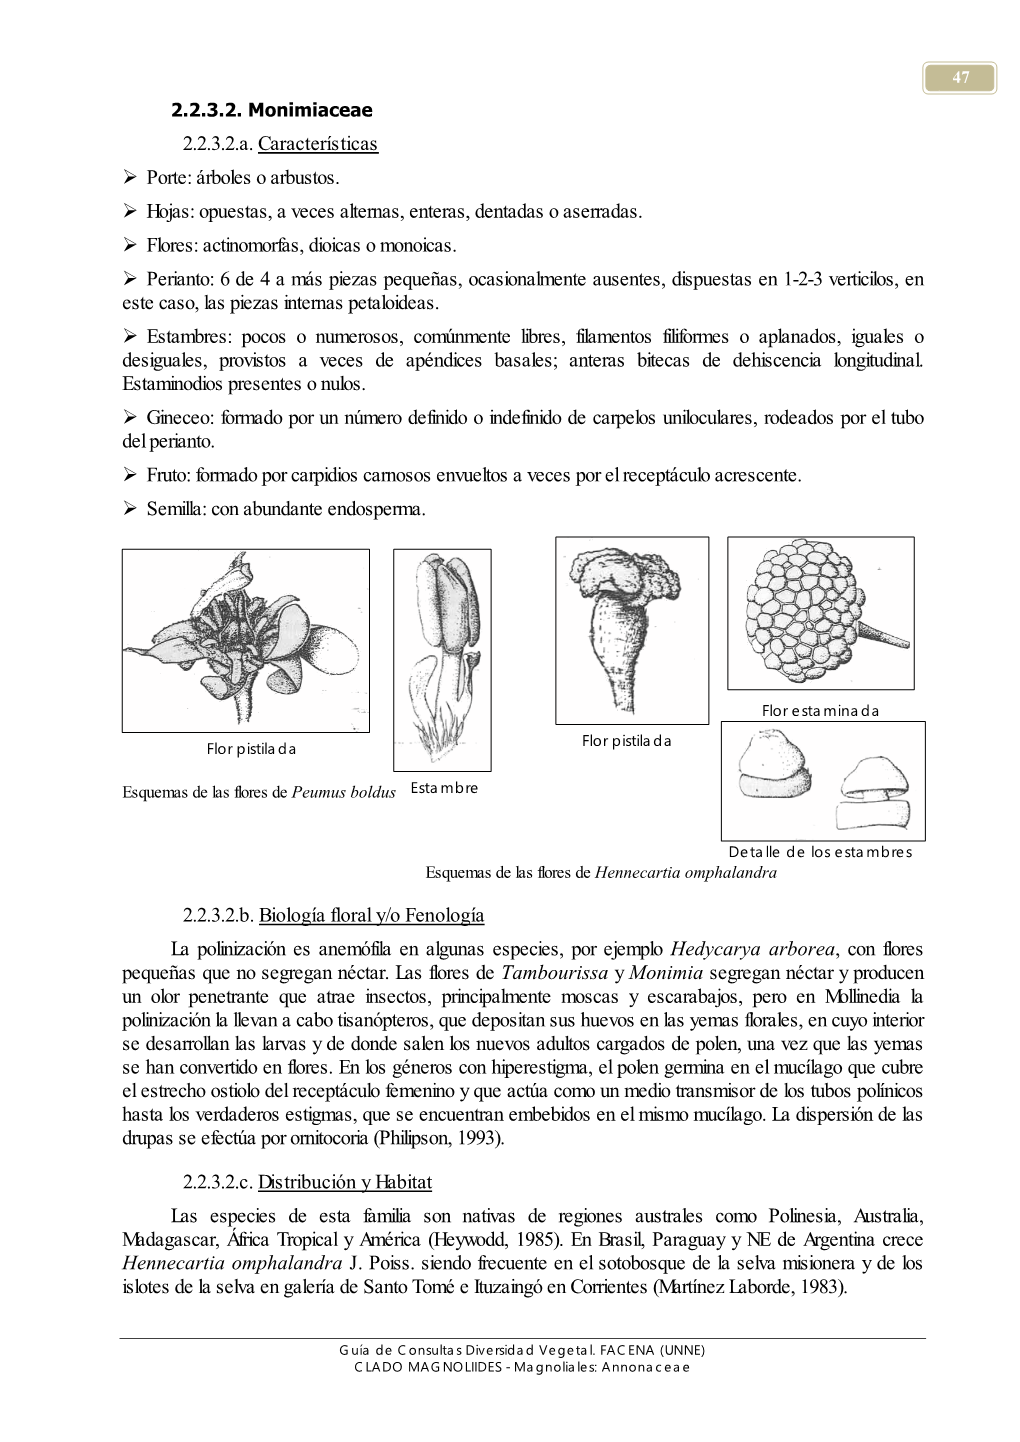 Monimiaceae 2.2.3.2.A